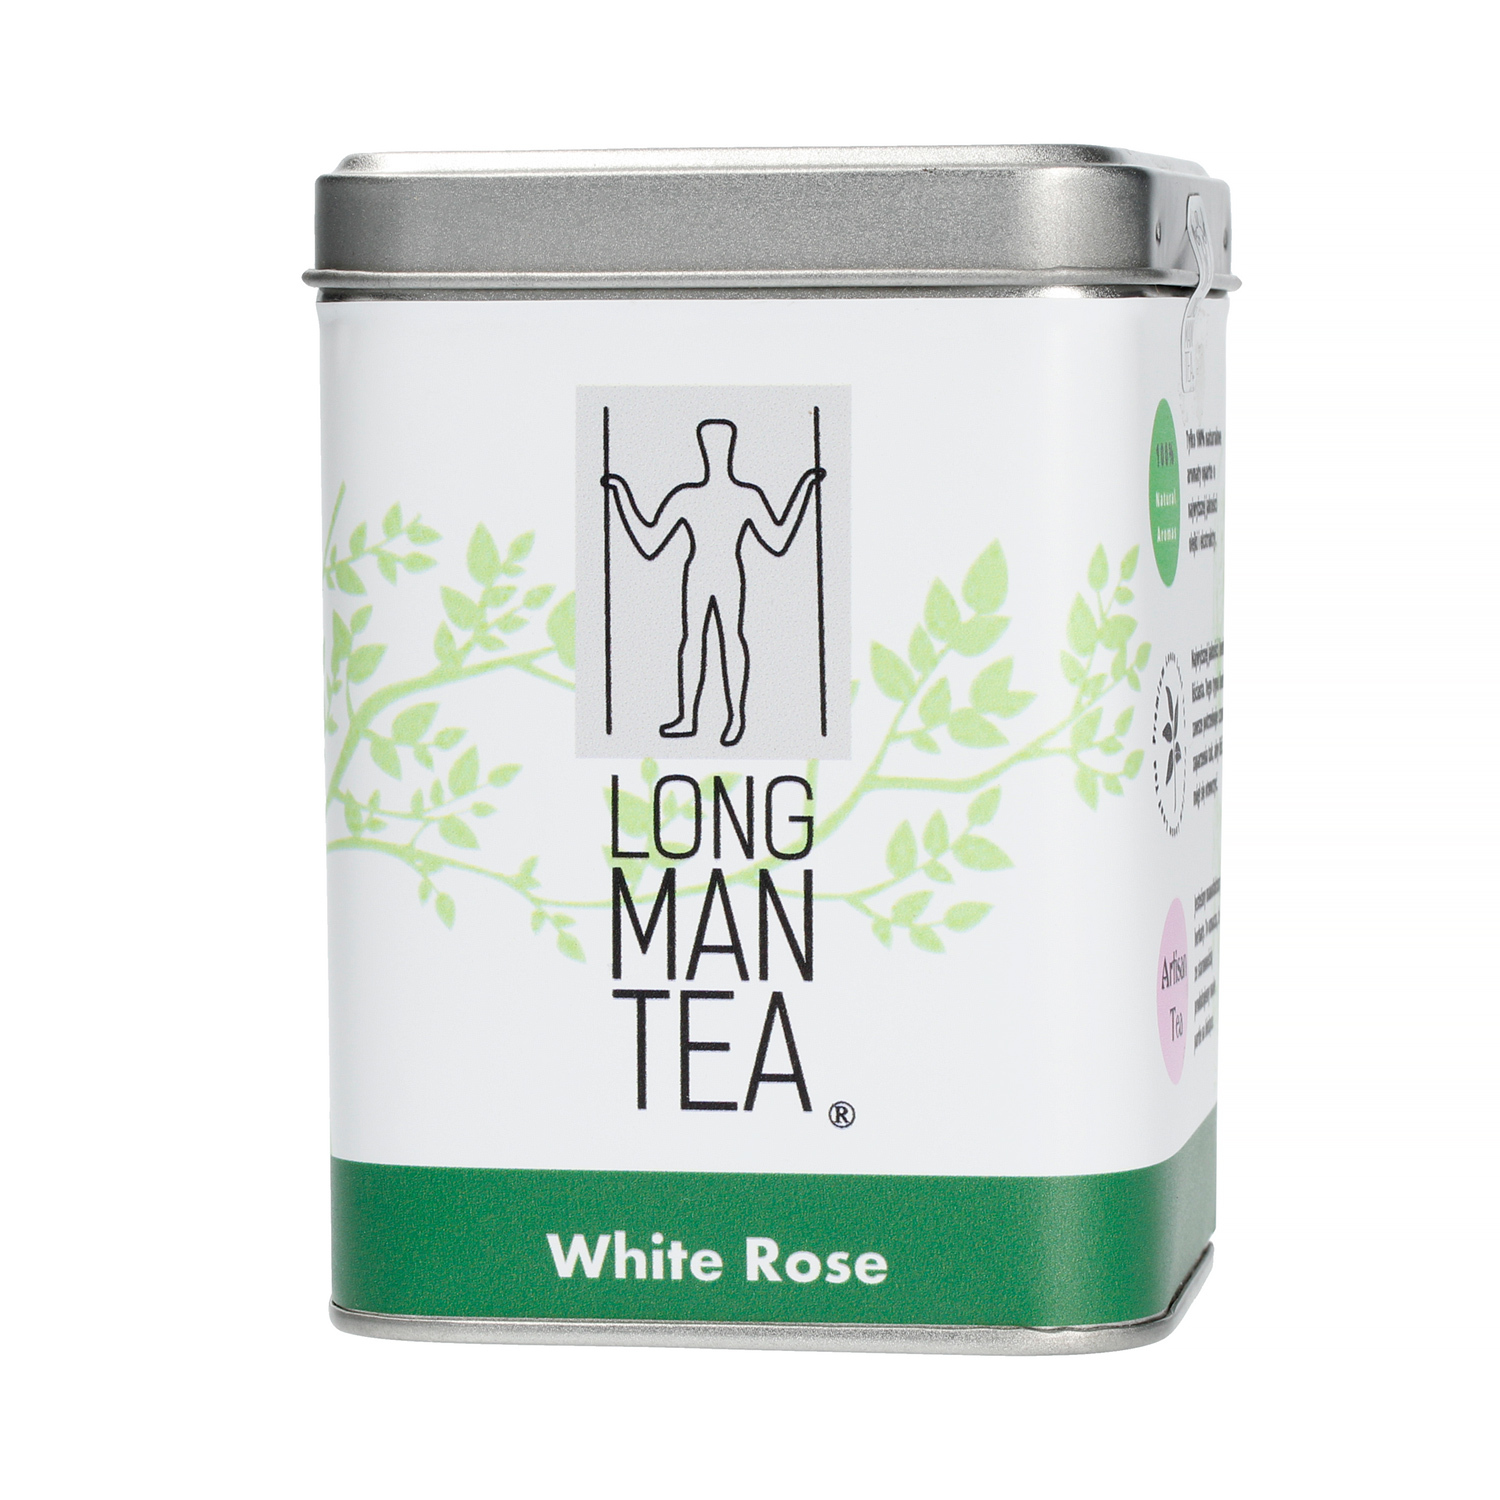 Long Man Tea - White Rose - Herbata sypana - Puszka 100g